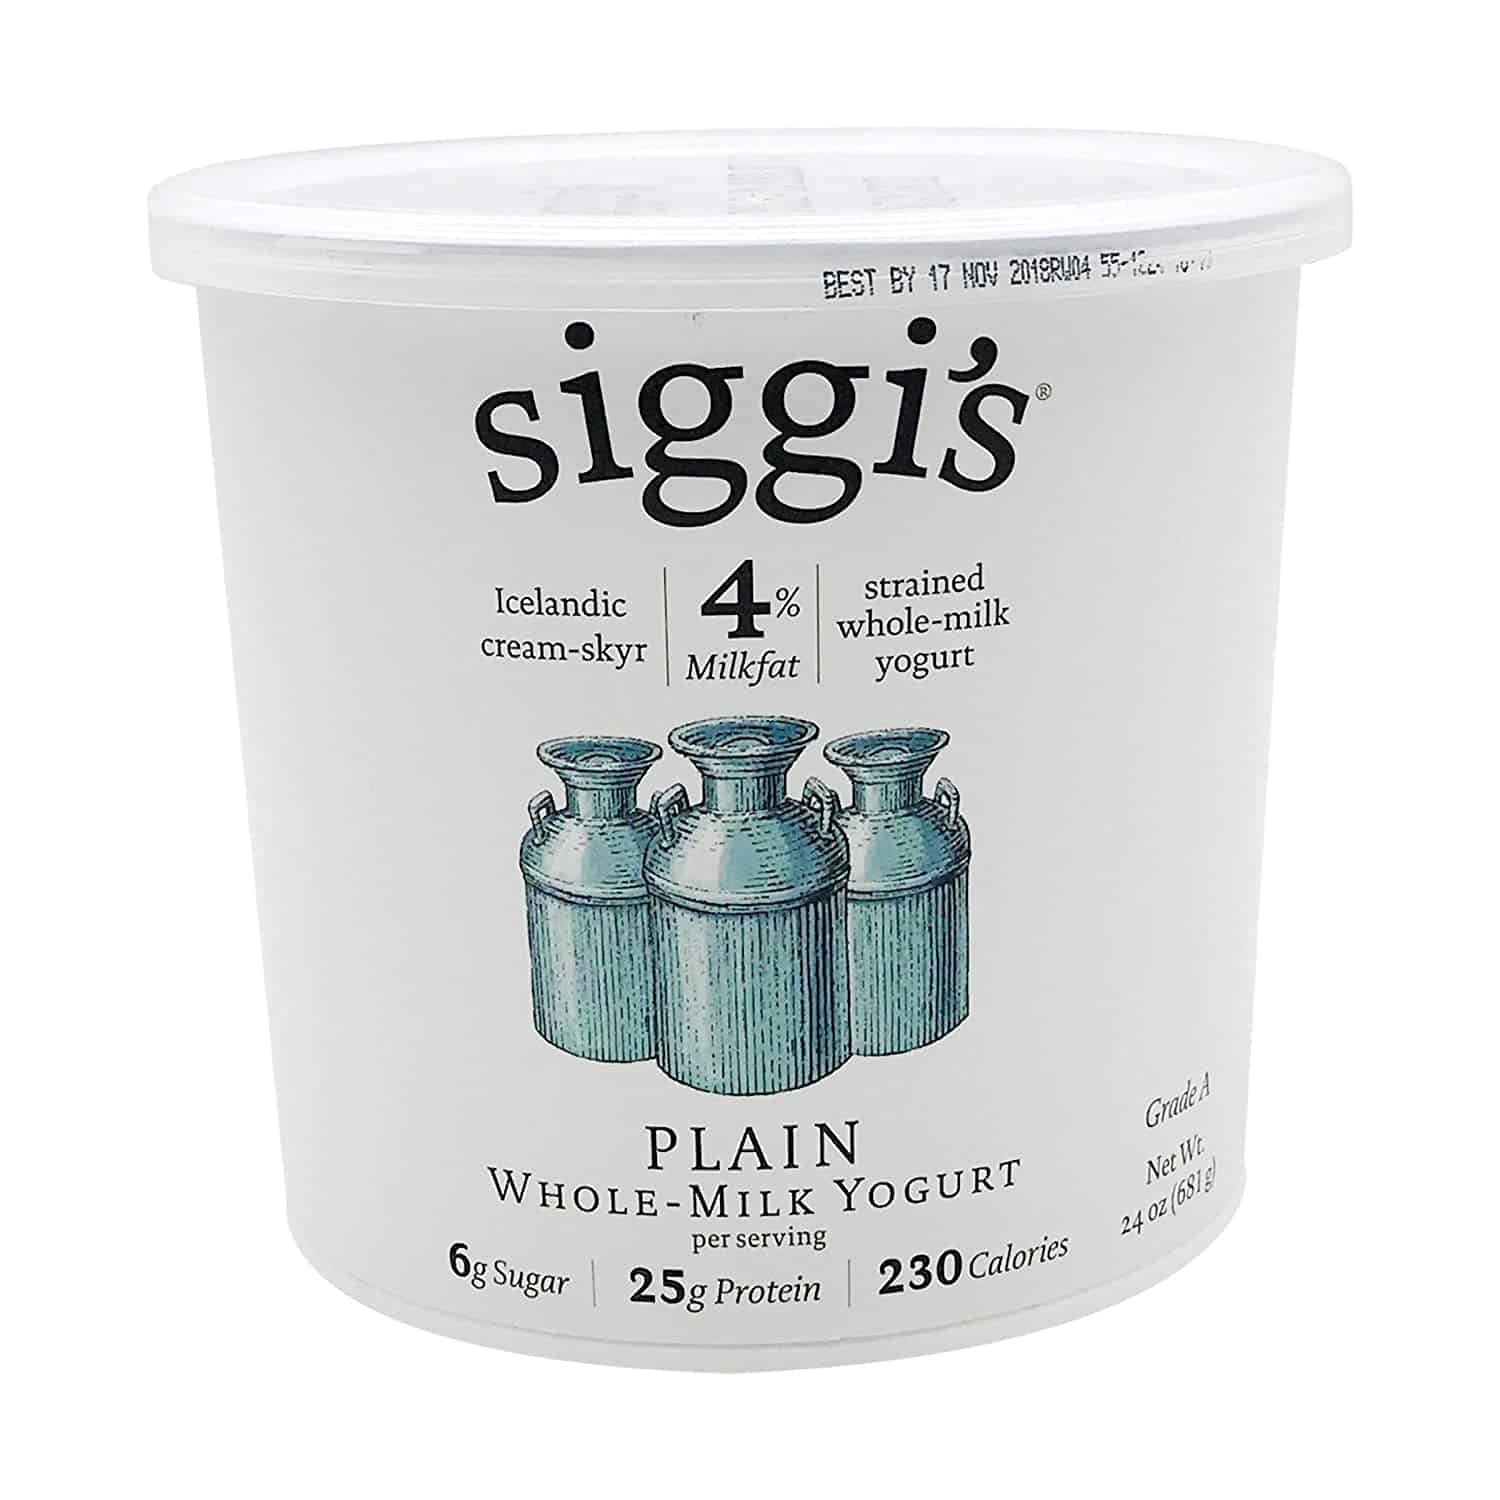 Siggi's Whole-Milk Icelandic Yogurt: Plain, 24 Oz.